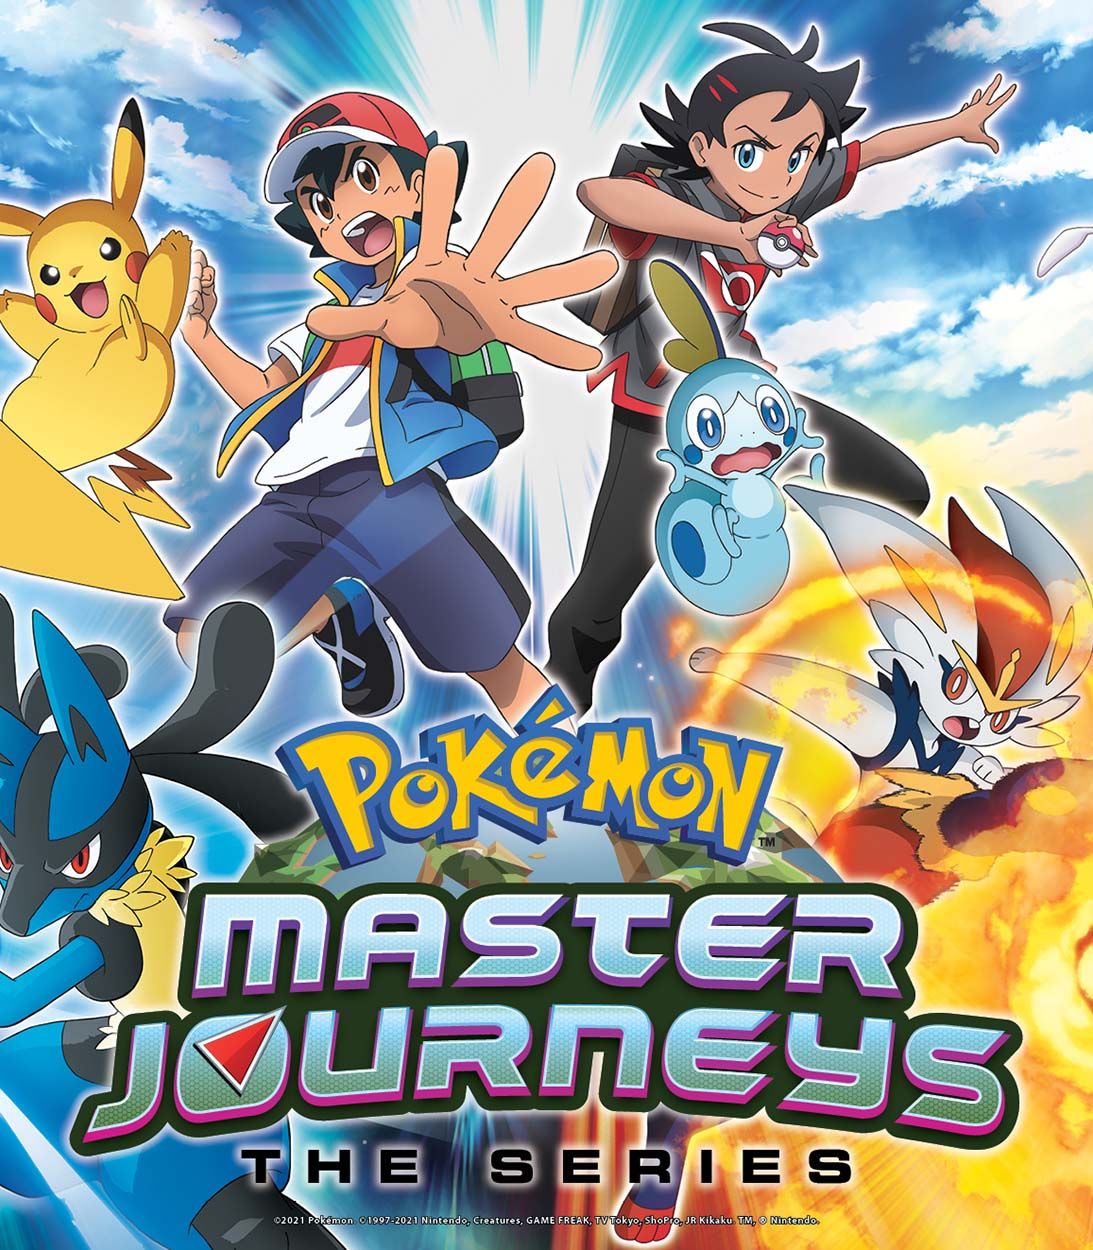 Pokémon Master Journeys: The Series Poster.